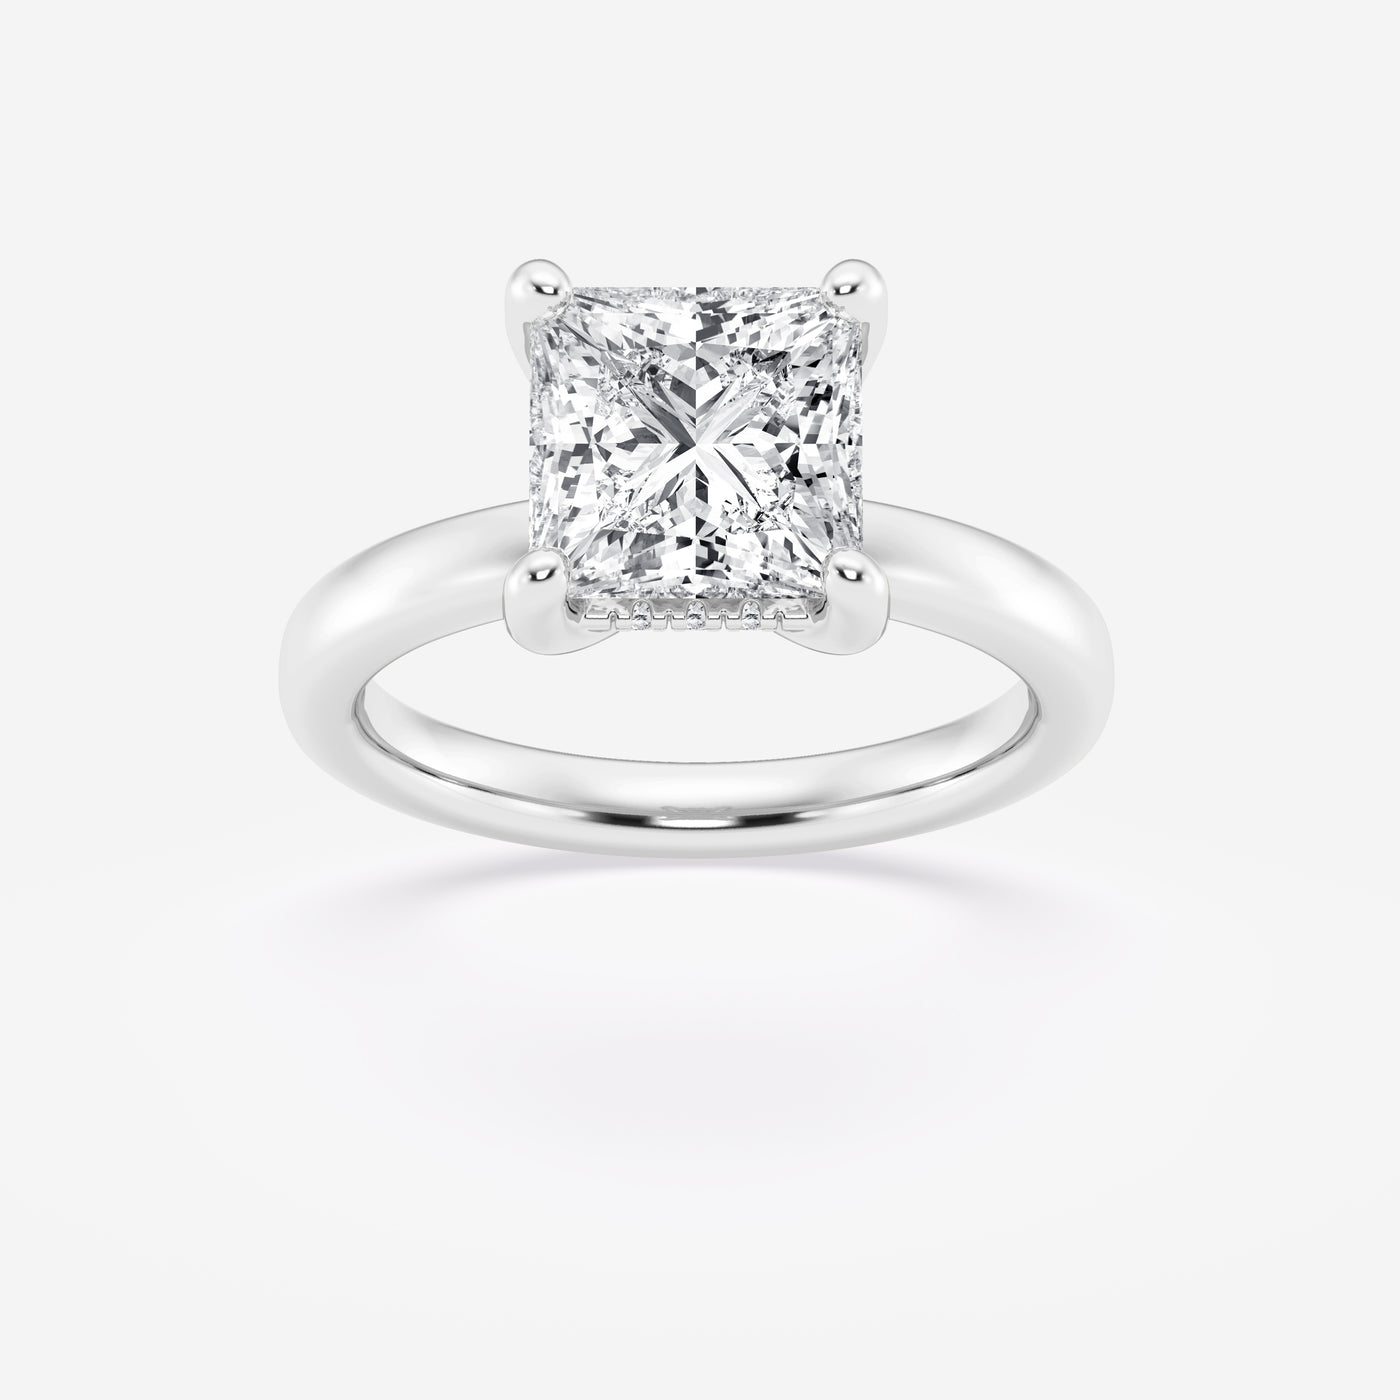 _main_image@SKU:LGRVR06585P300HW4~#carat_3.07#diamond-quality_ef,-vs2+#metal_18k-white-gold